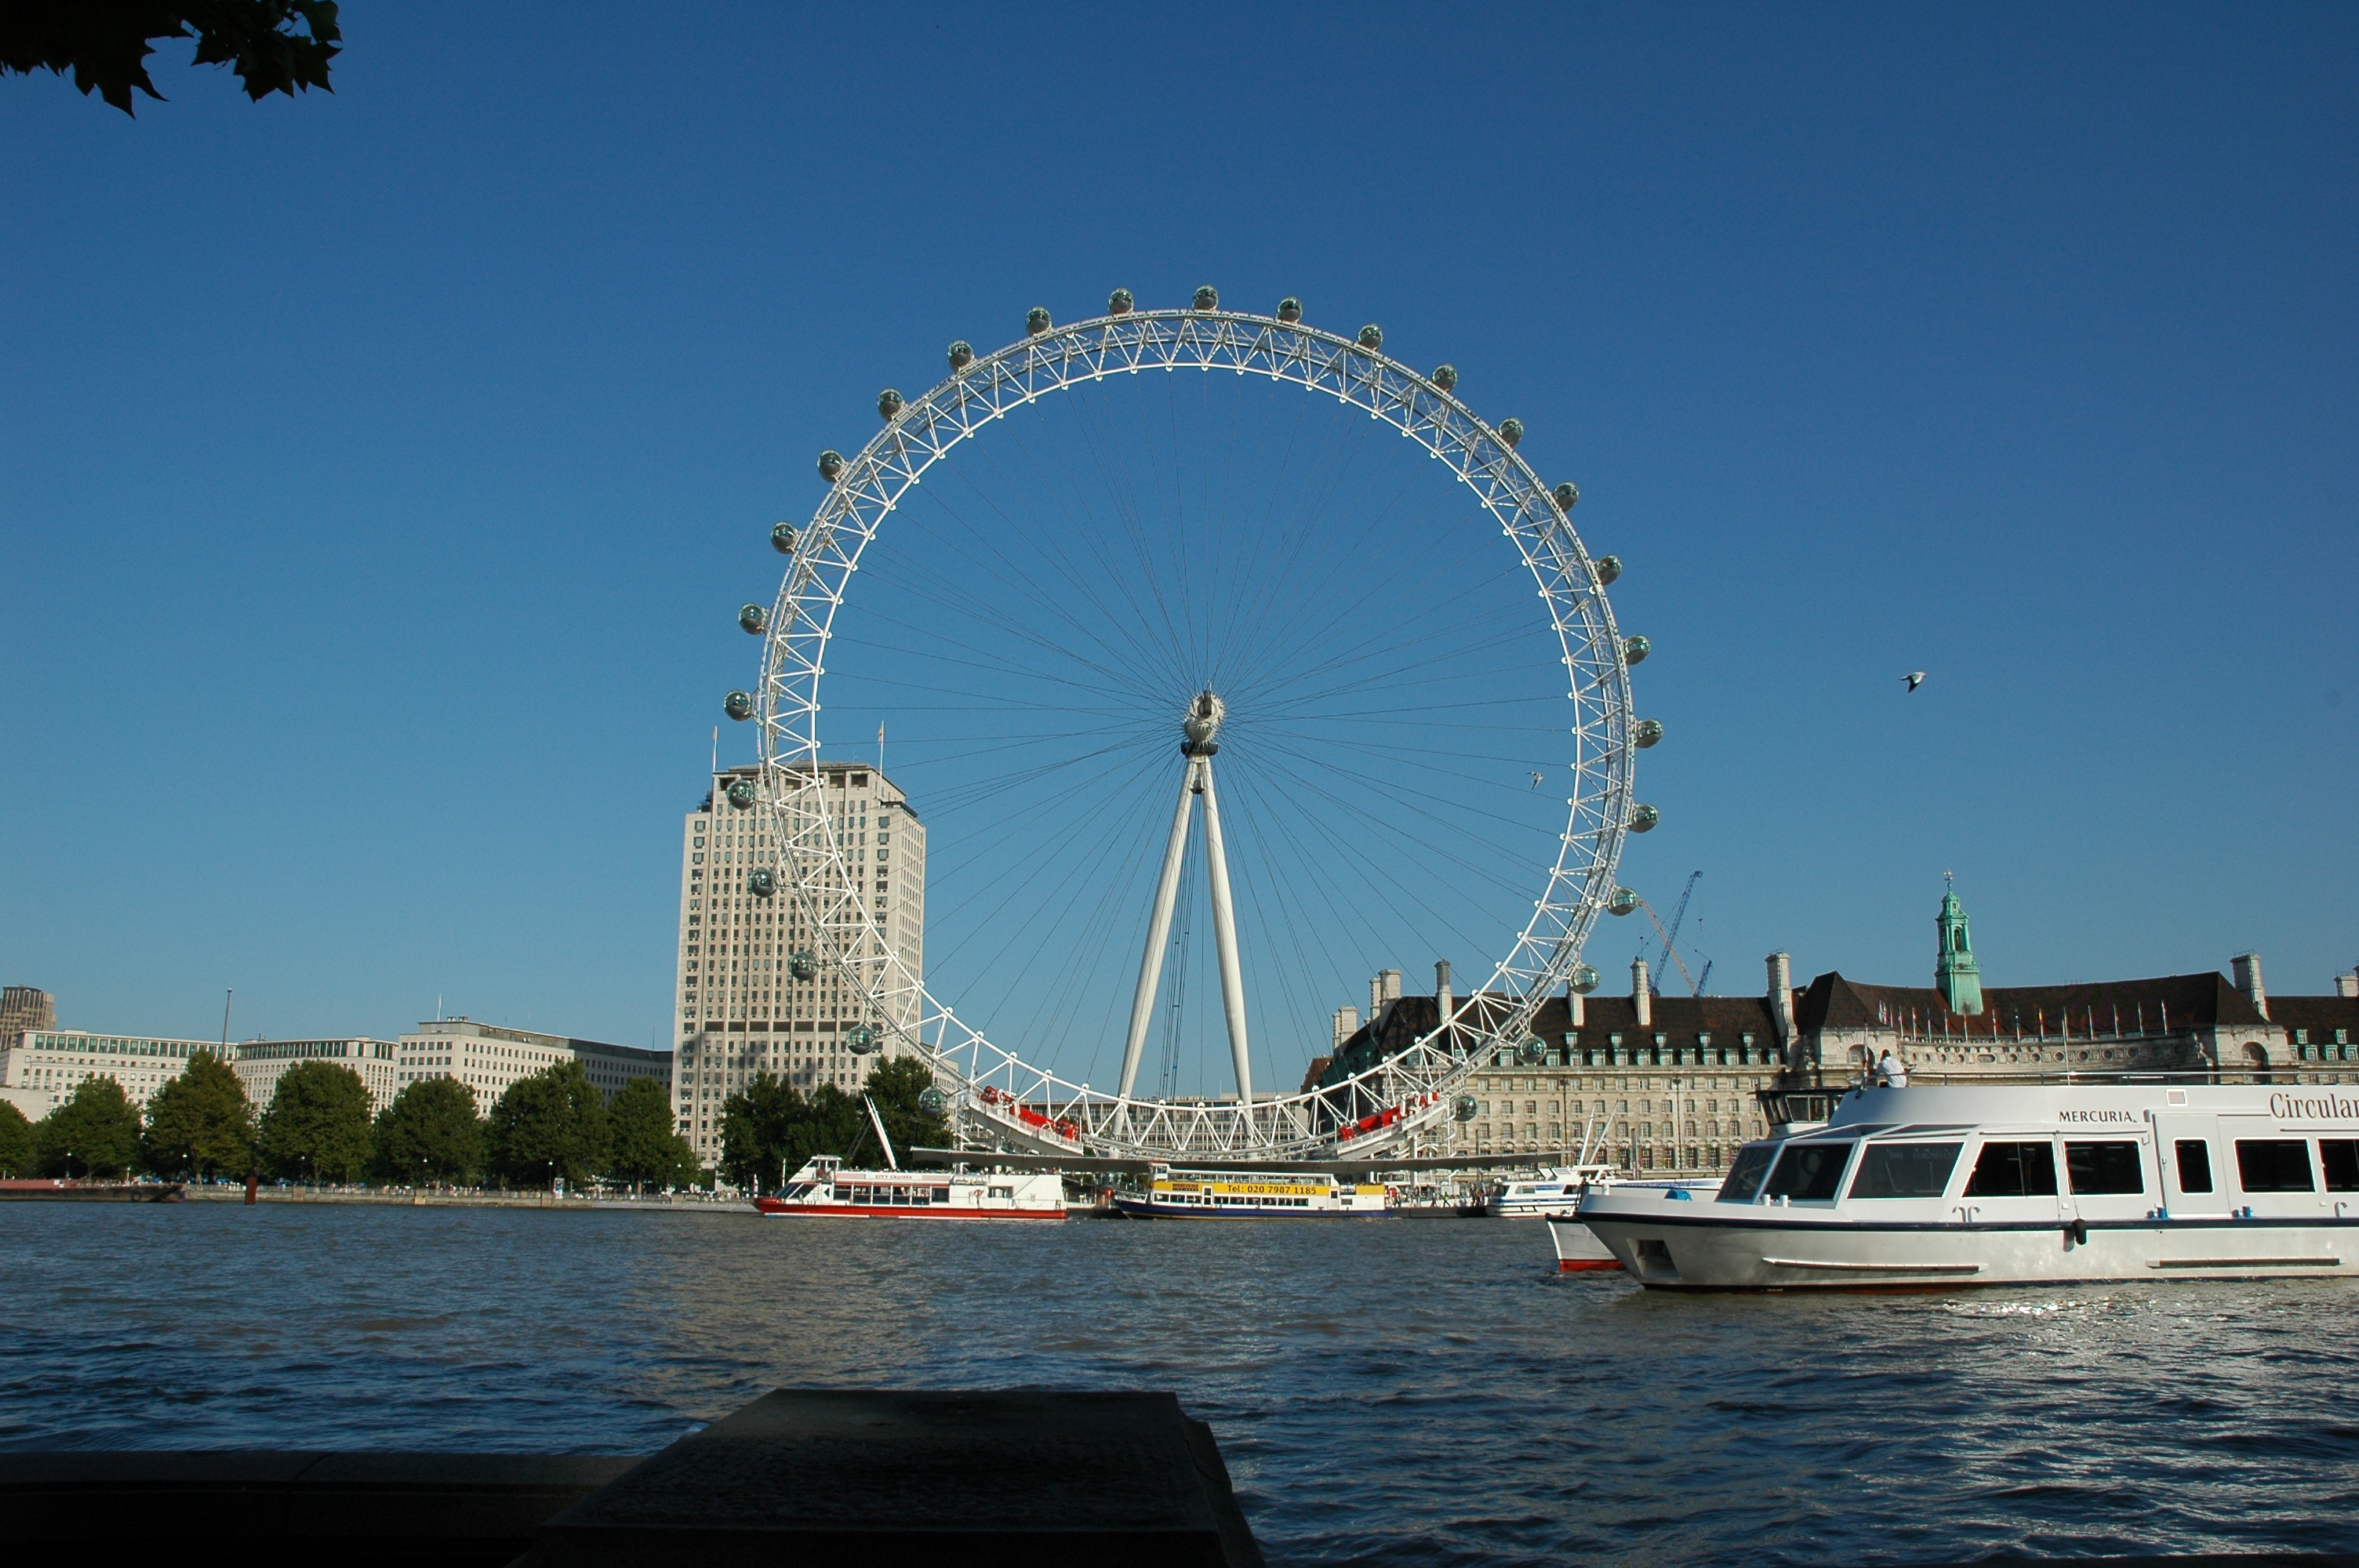 London Eye (2012)